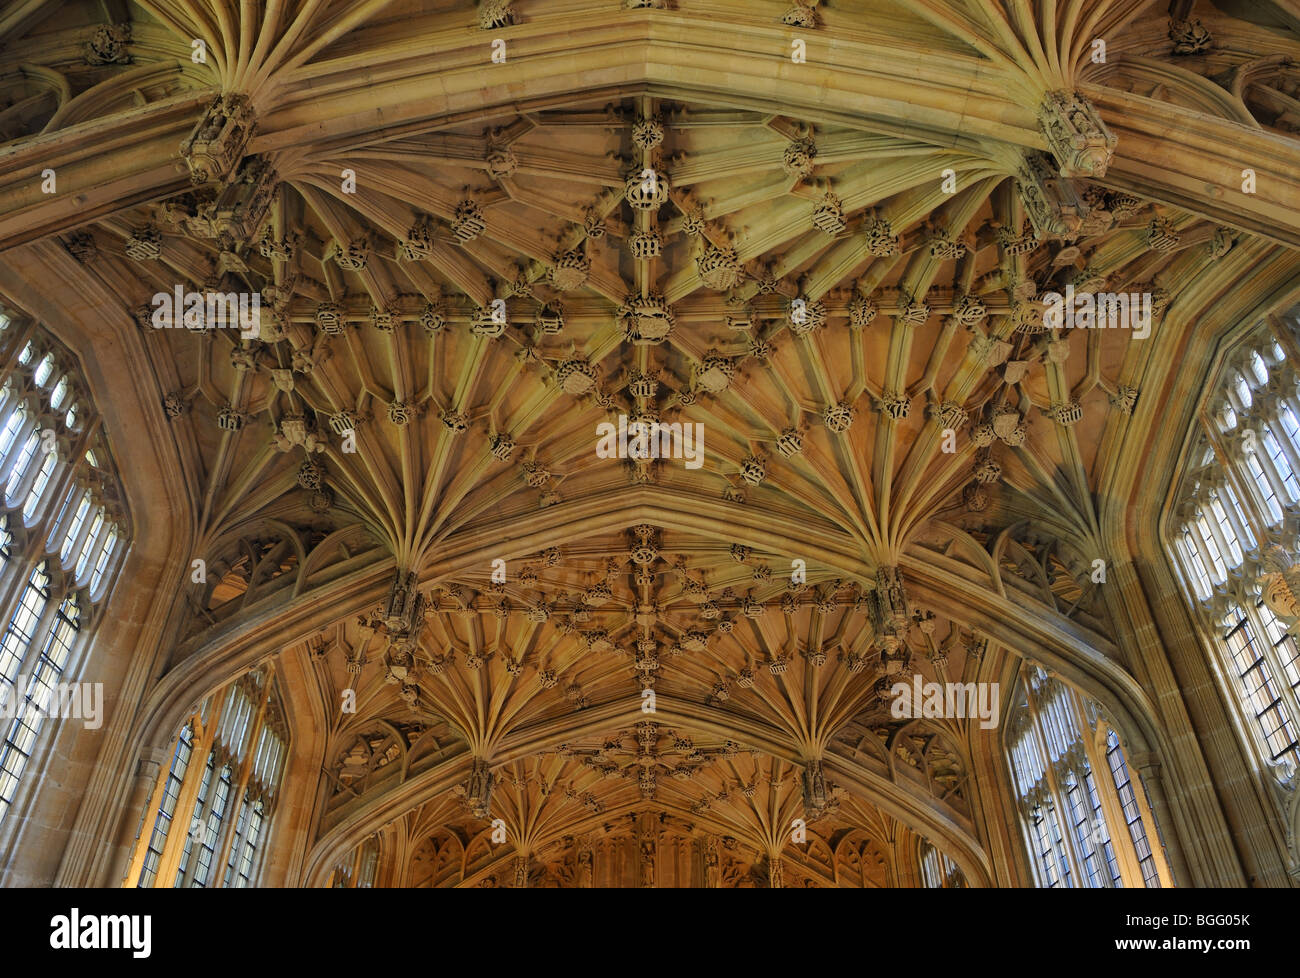 Divinity School Ceiling, Oxford - Britain Stock Photo